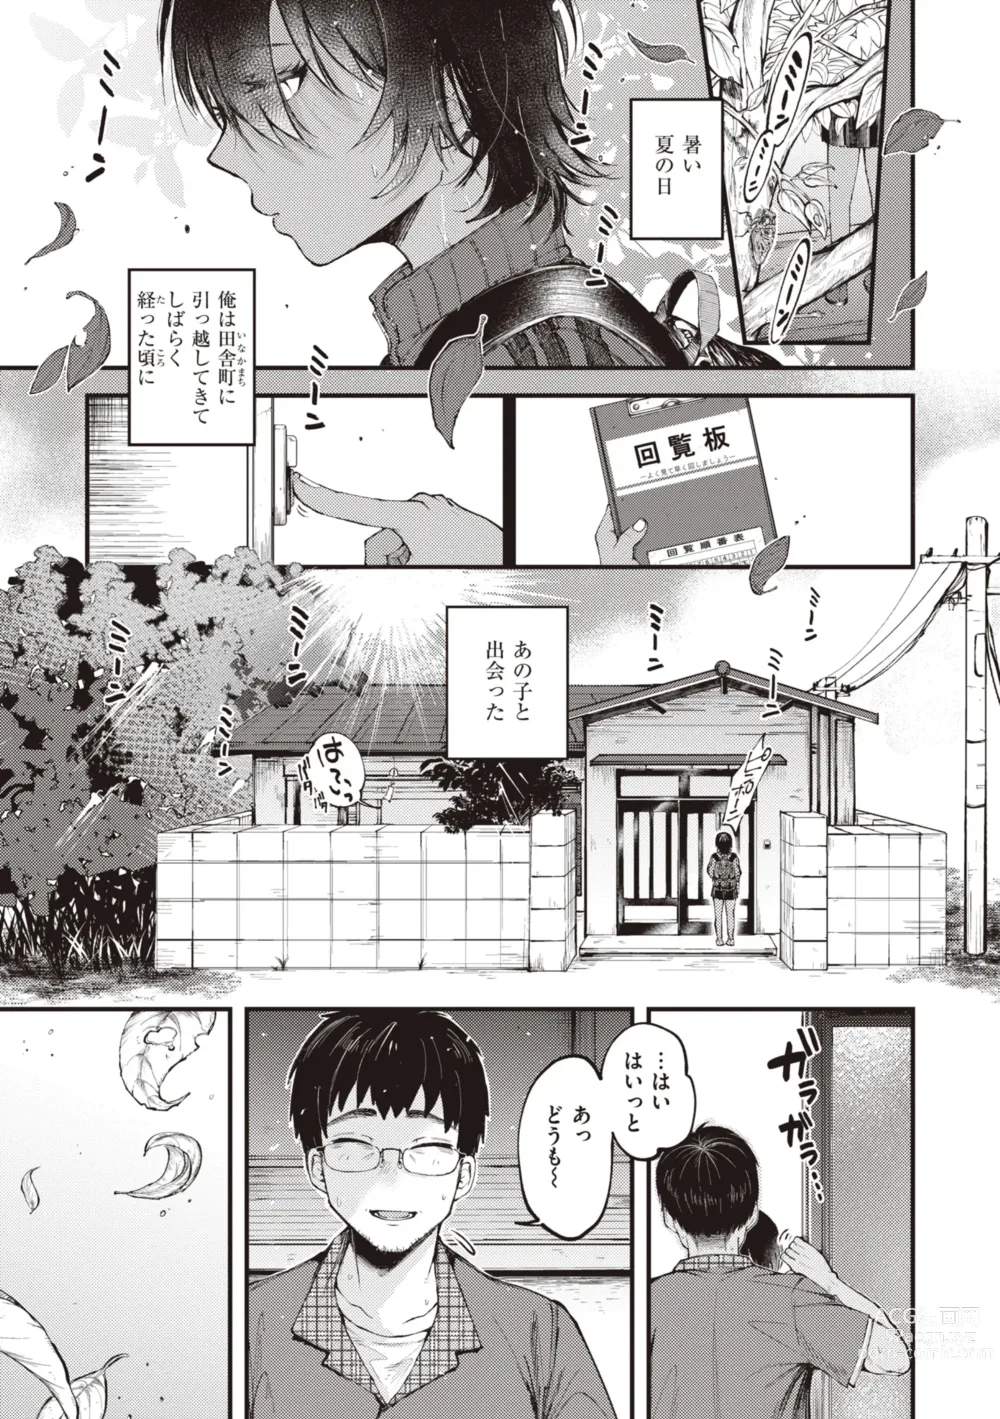 Page 3 of manga Seishun -Sexual Seasons-